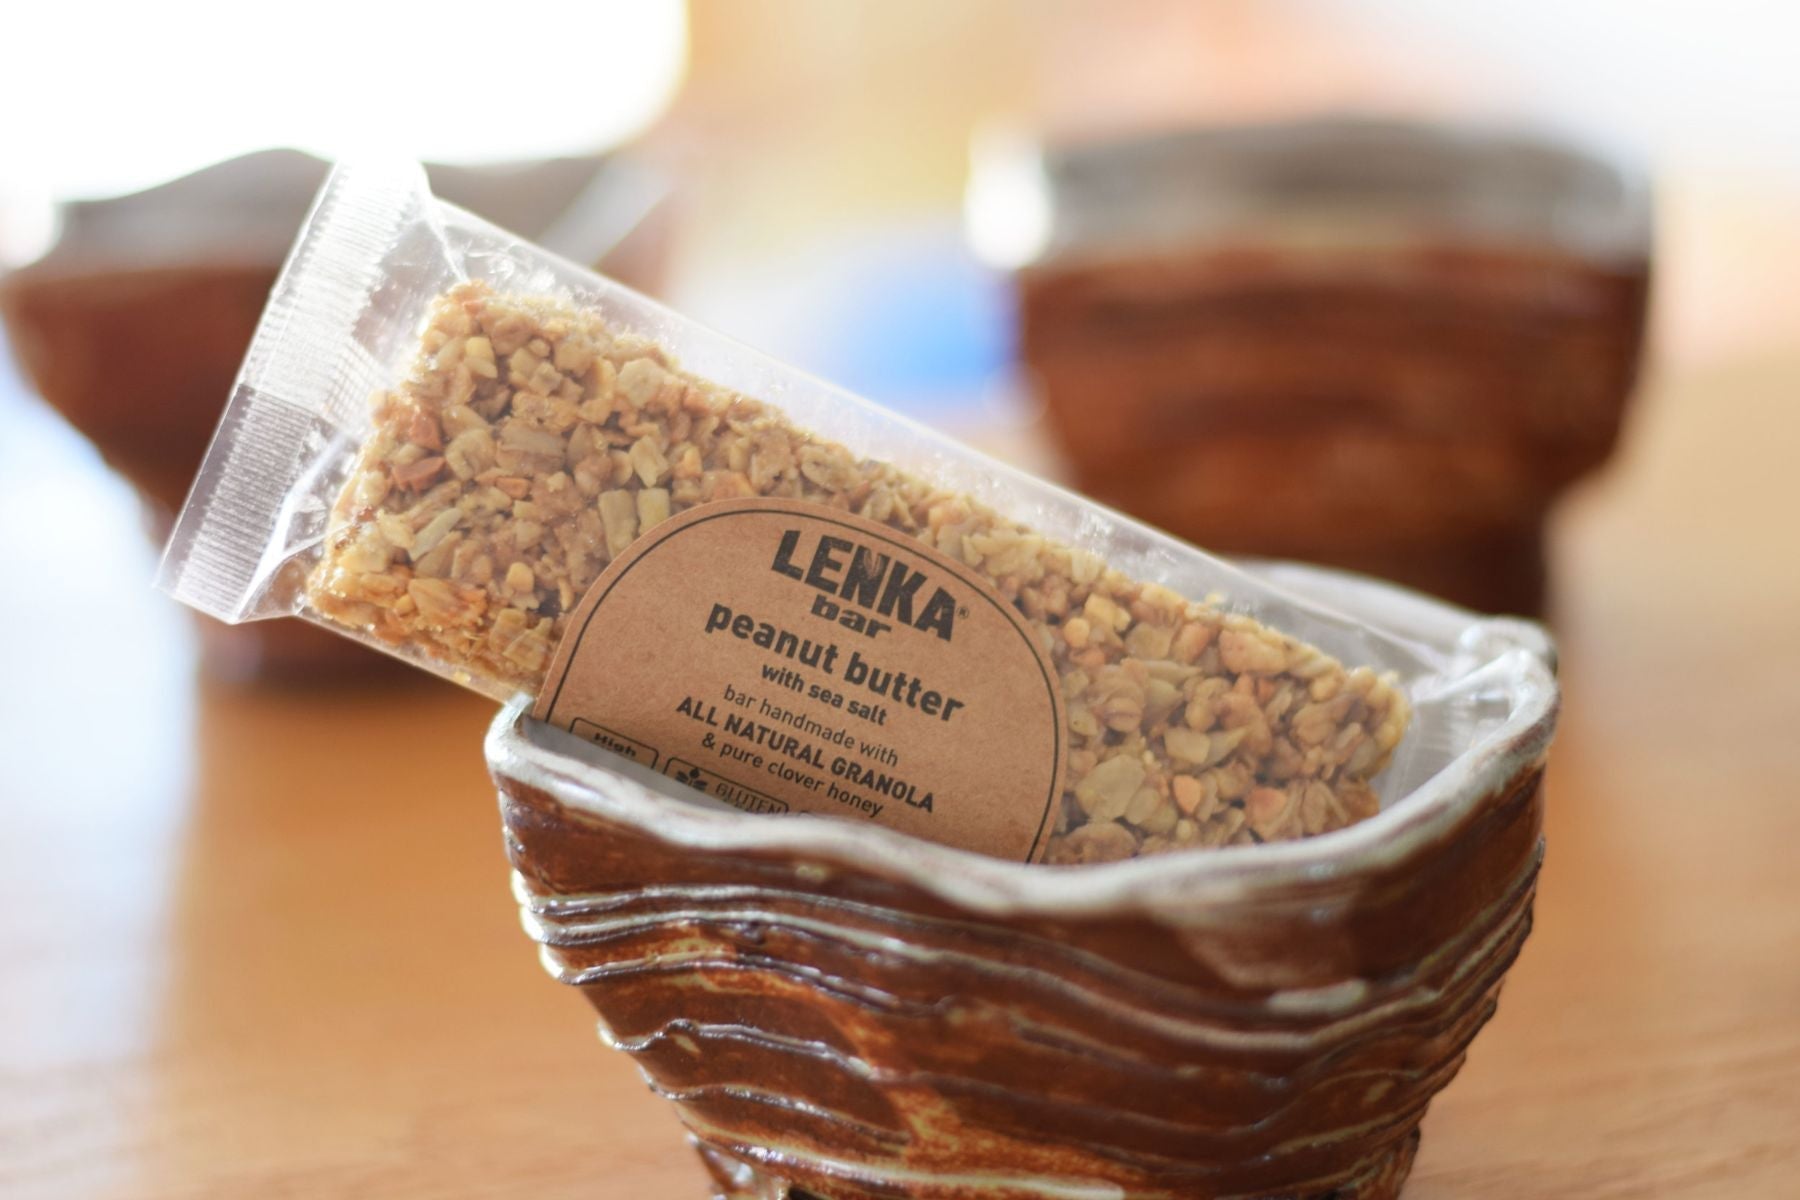 Lenka Bar - Peanut Butter with Sea Salt